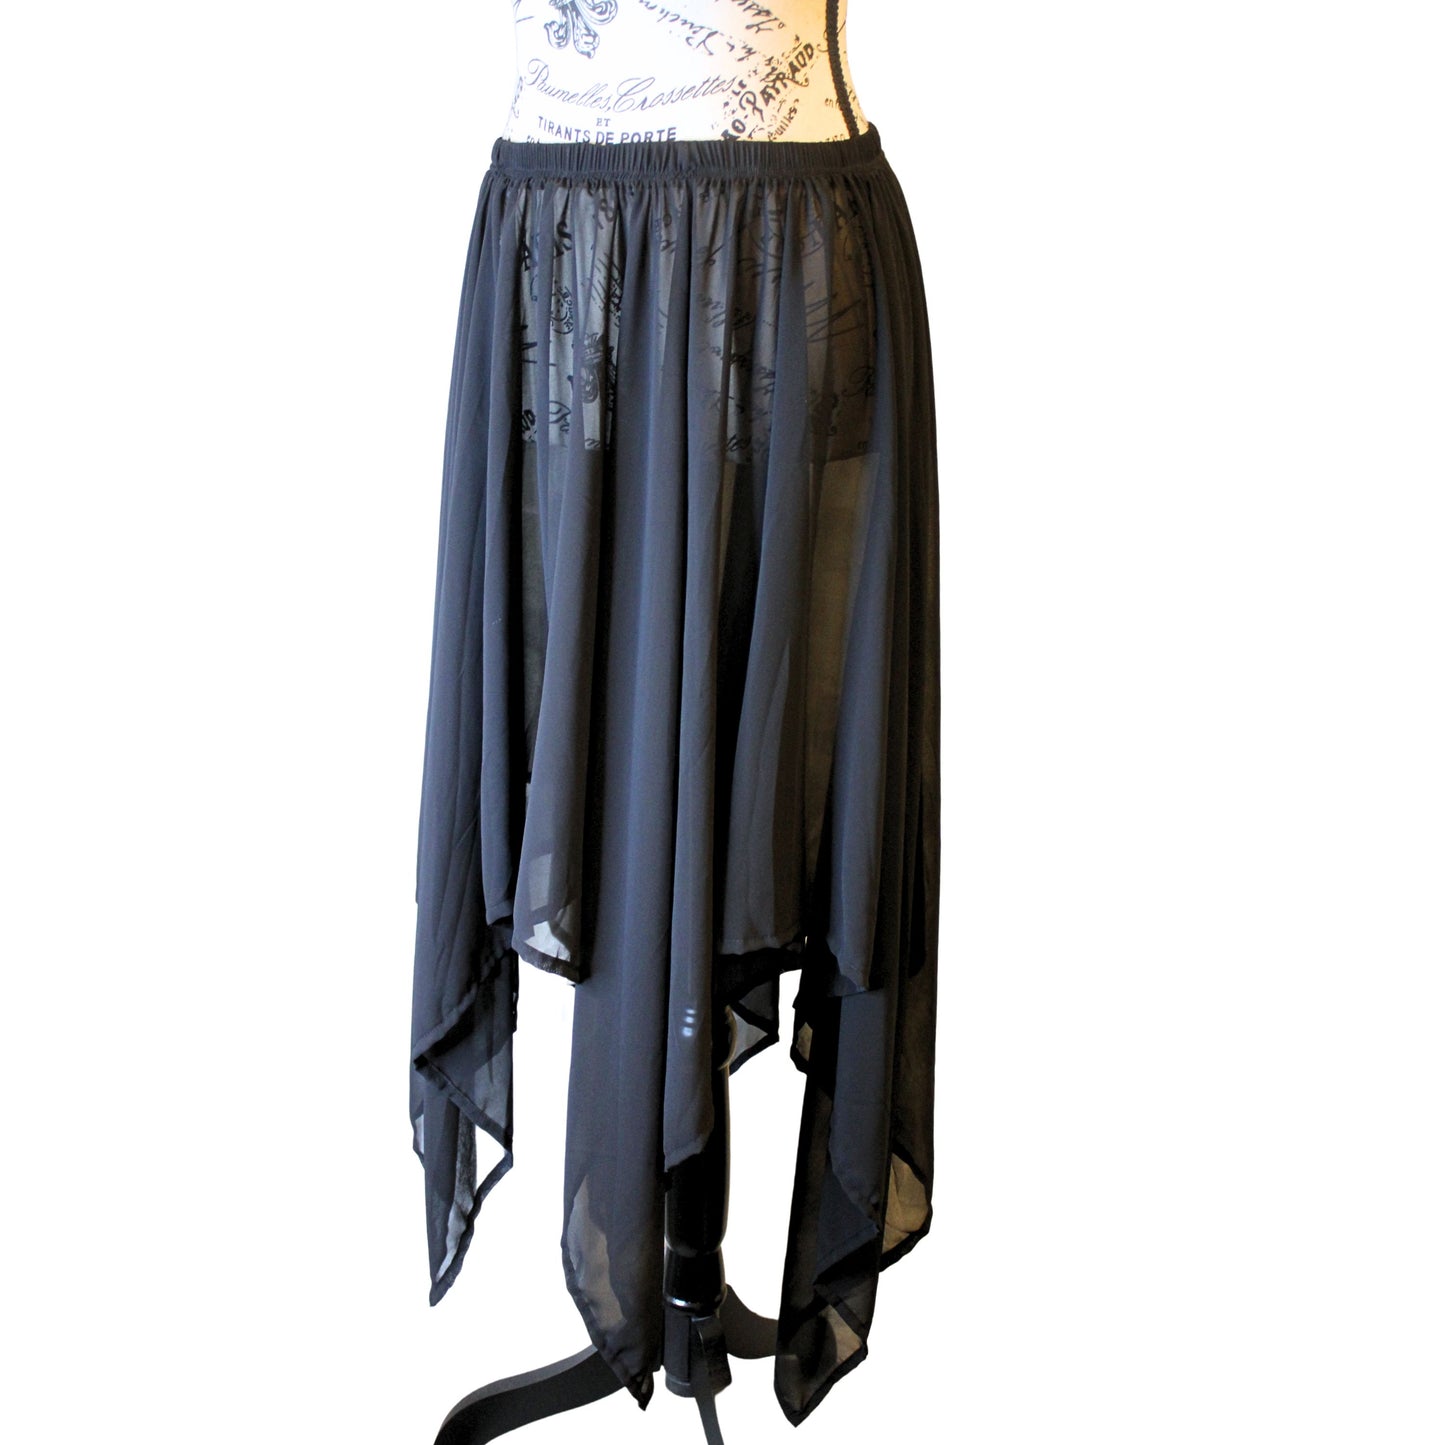 The VM Chiffon Asymmetrical Skirt